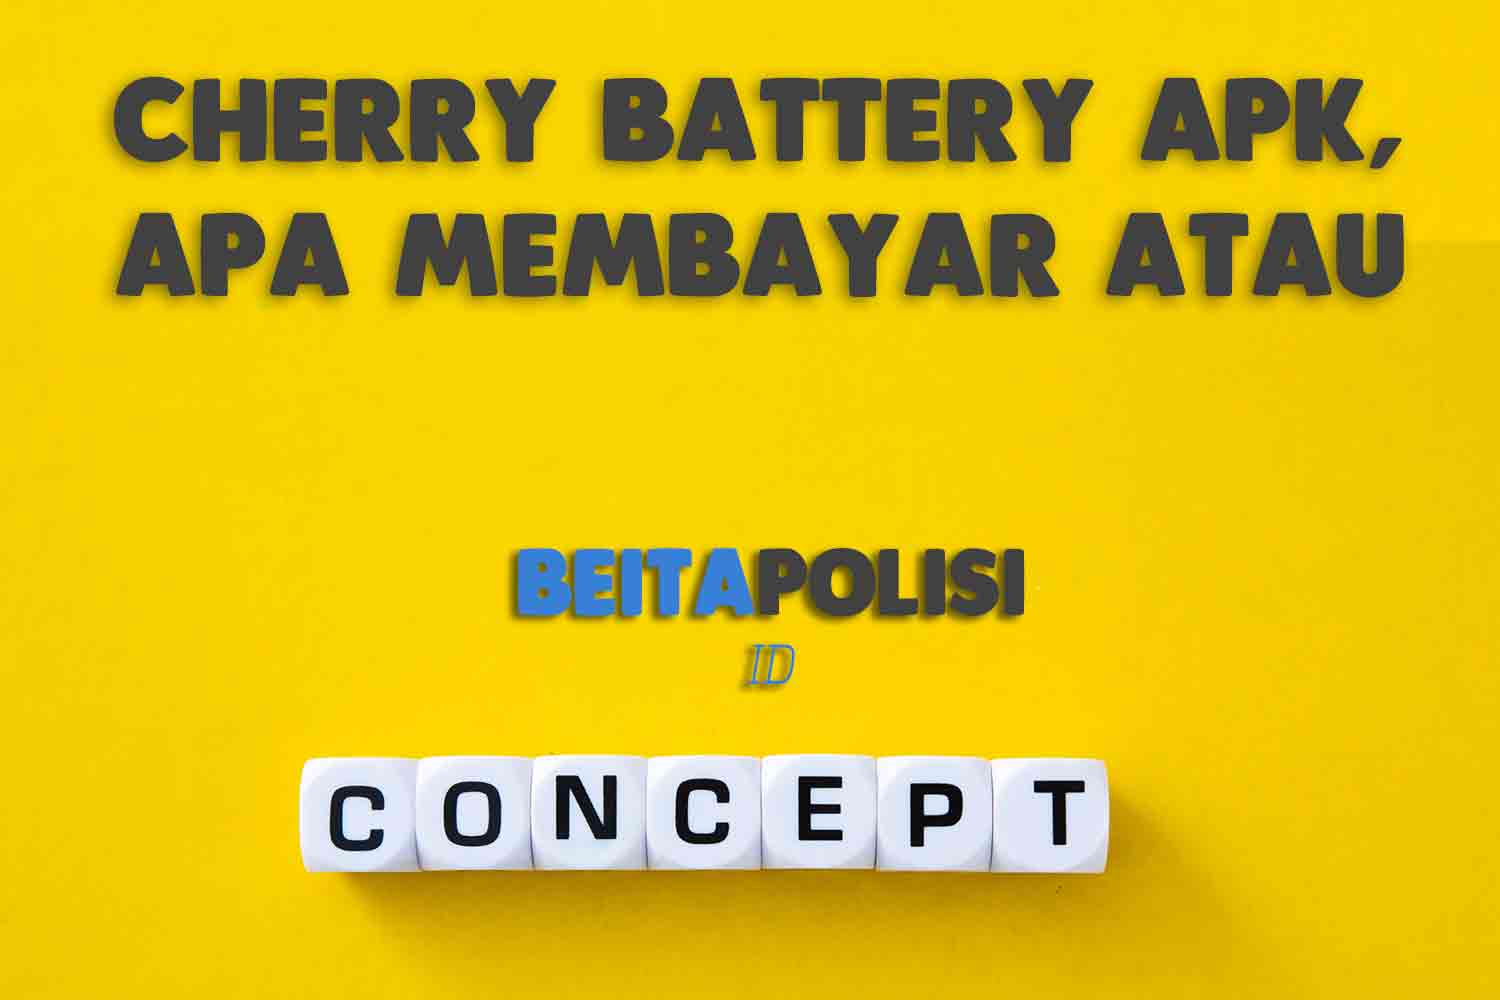 Cherry Battery Apk Apa Membayar Atau Modus Penipuan